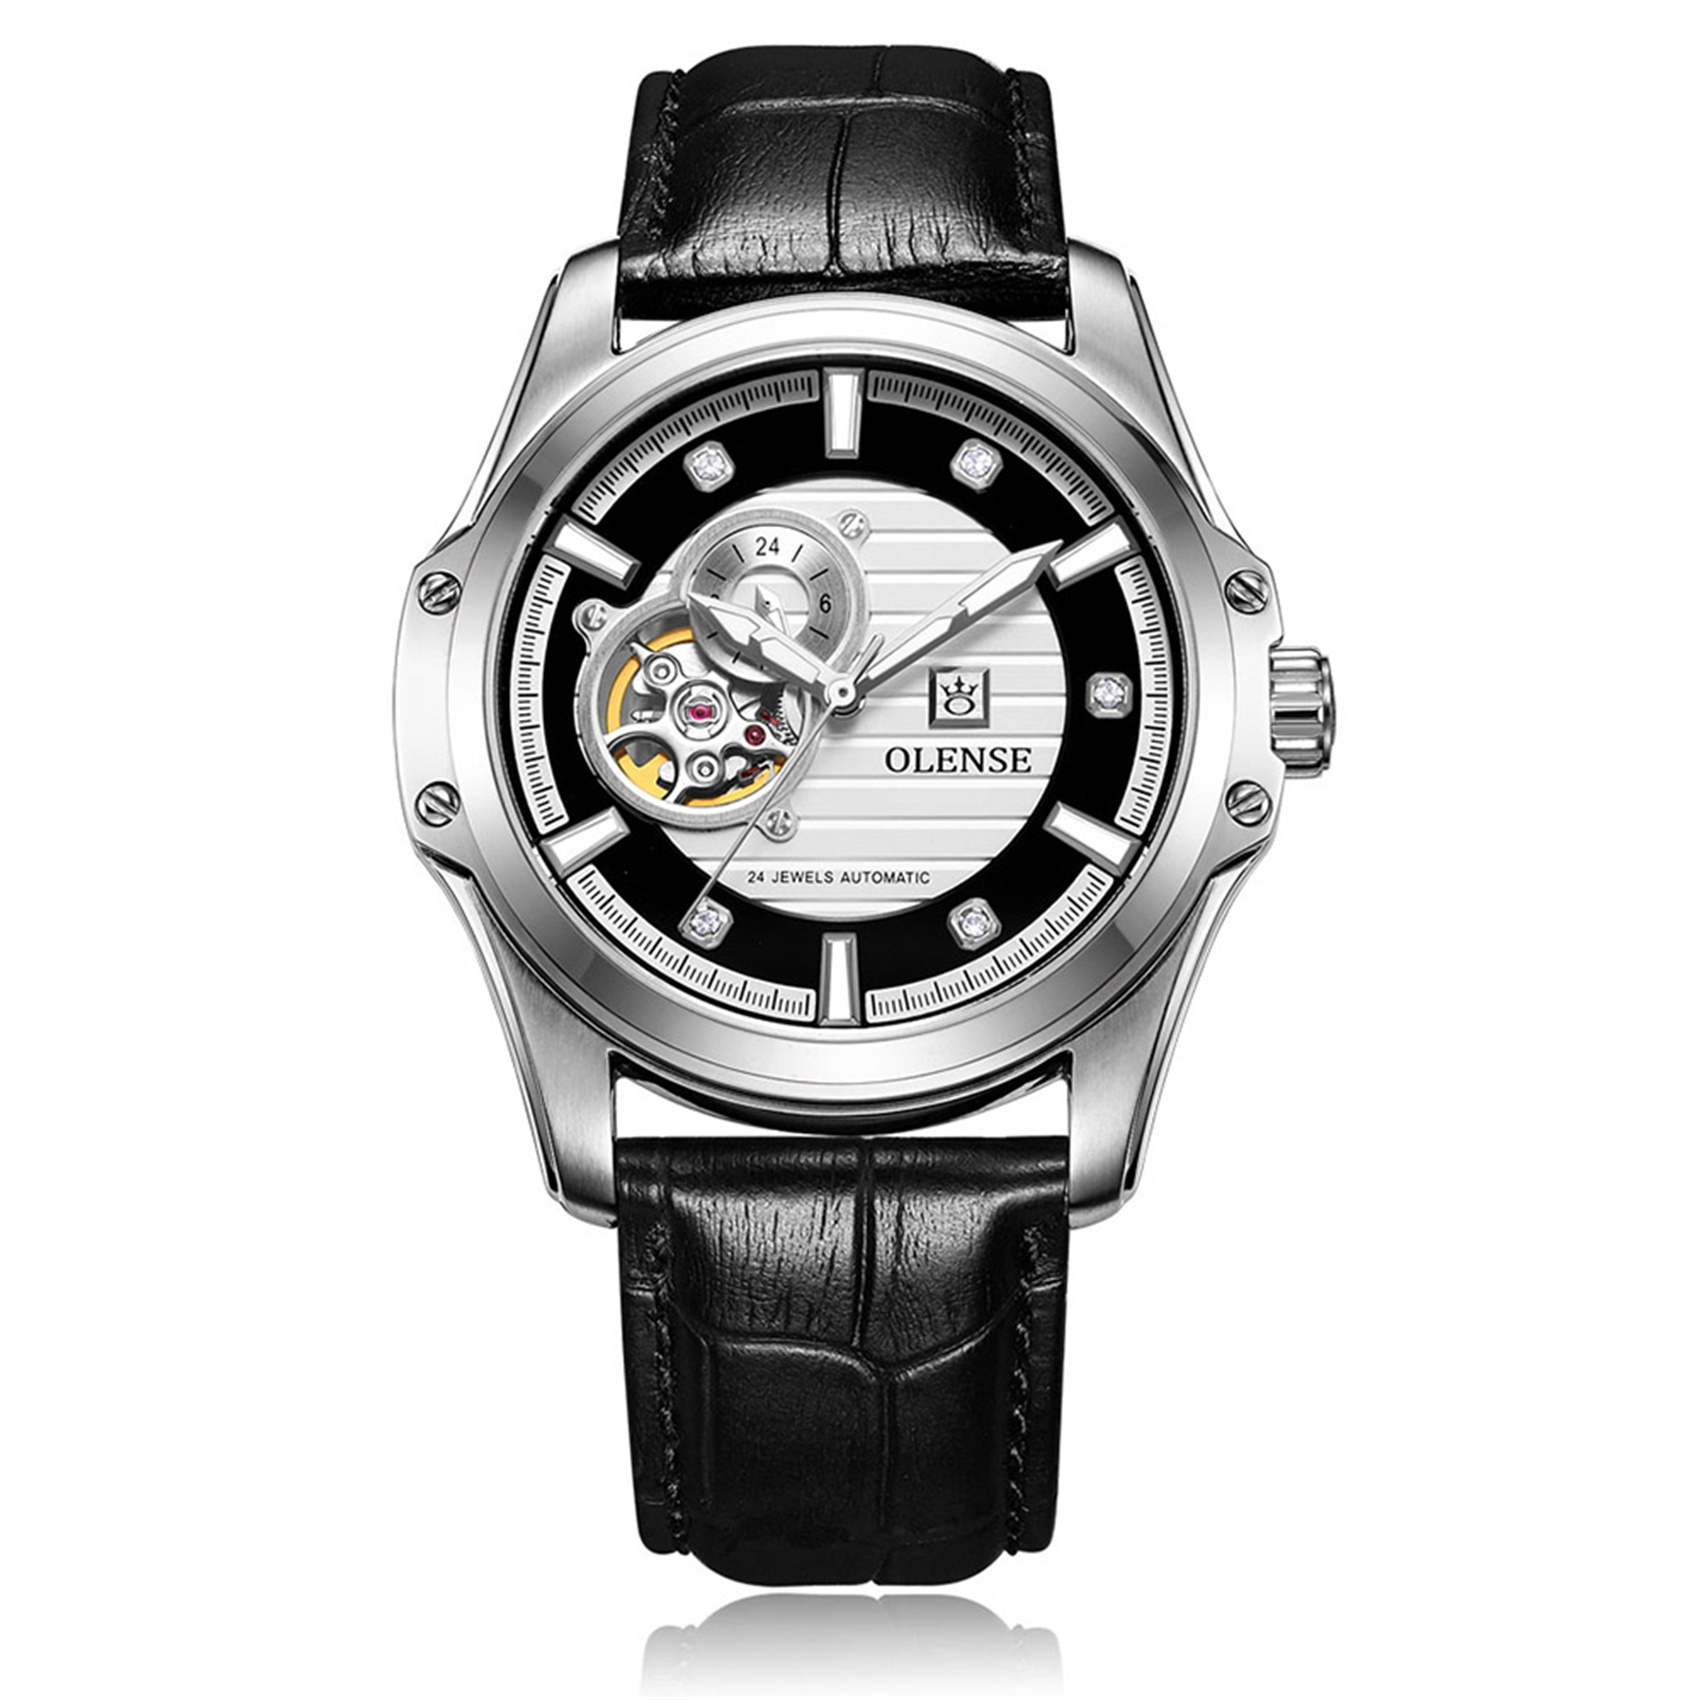 OLENSE - Men's Dress Watch, Mechanical, Diamond, Leather Strap, 43.5mm, Black & SilverDial